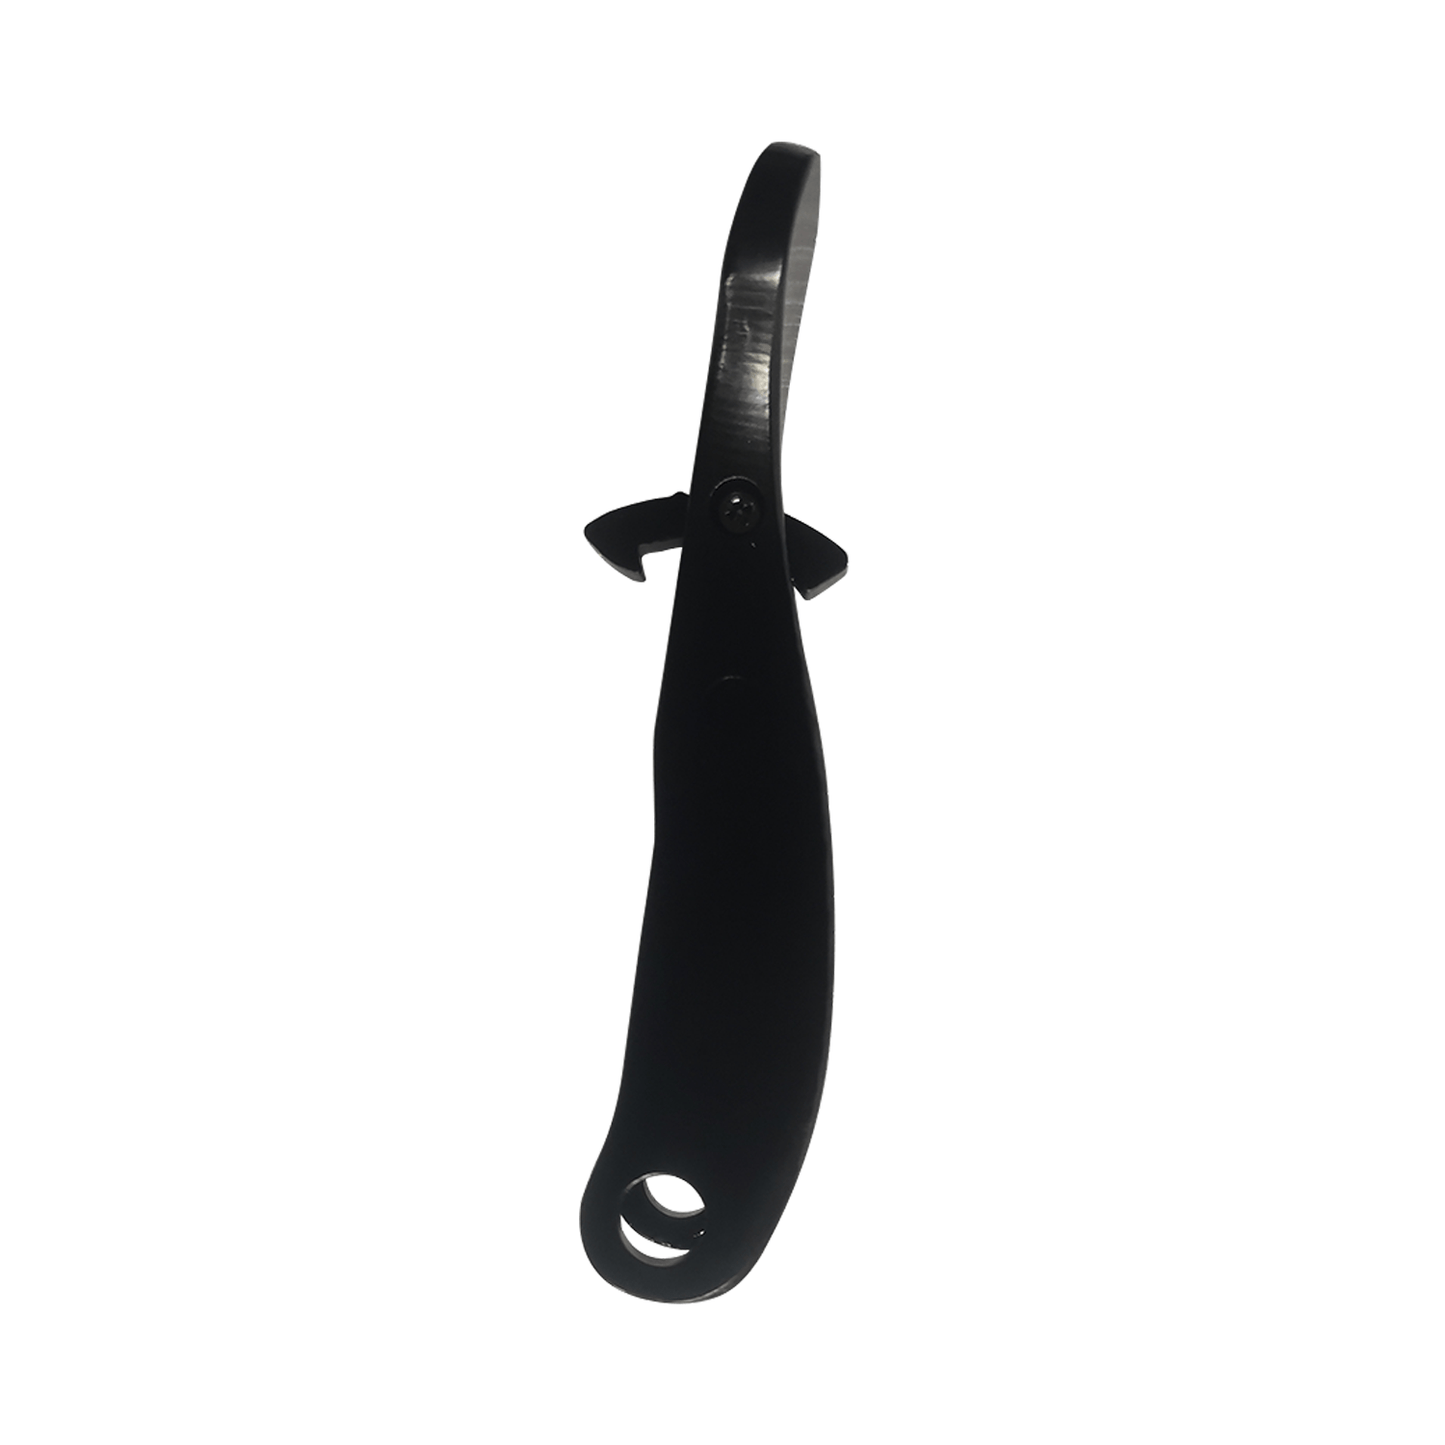 Hiboy MAX3 folding handle (Old version)